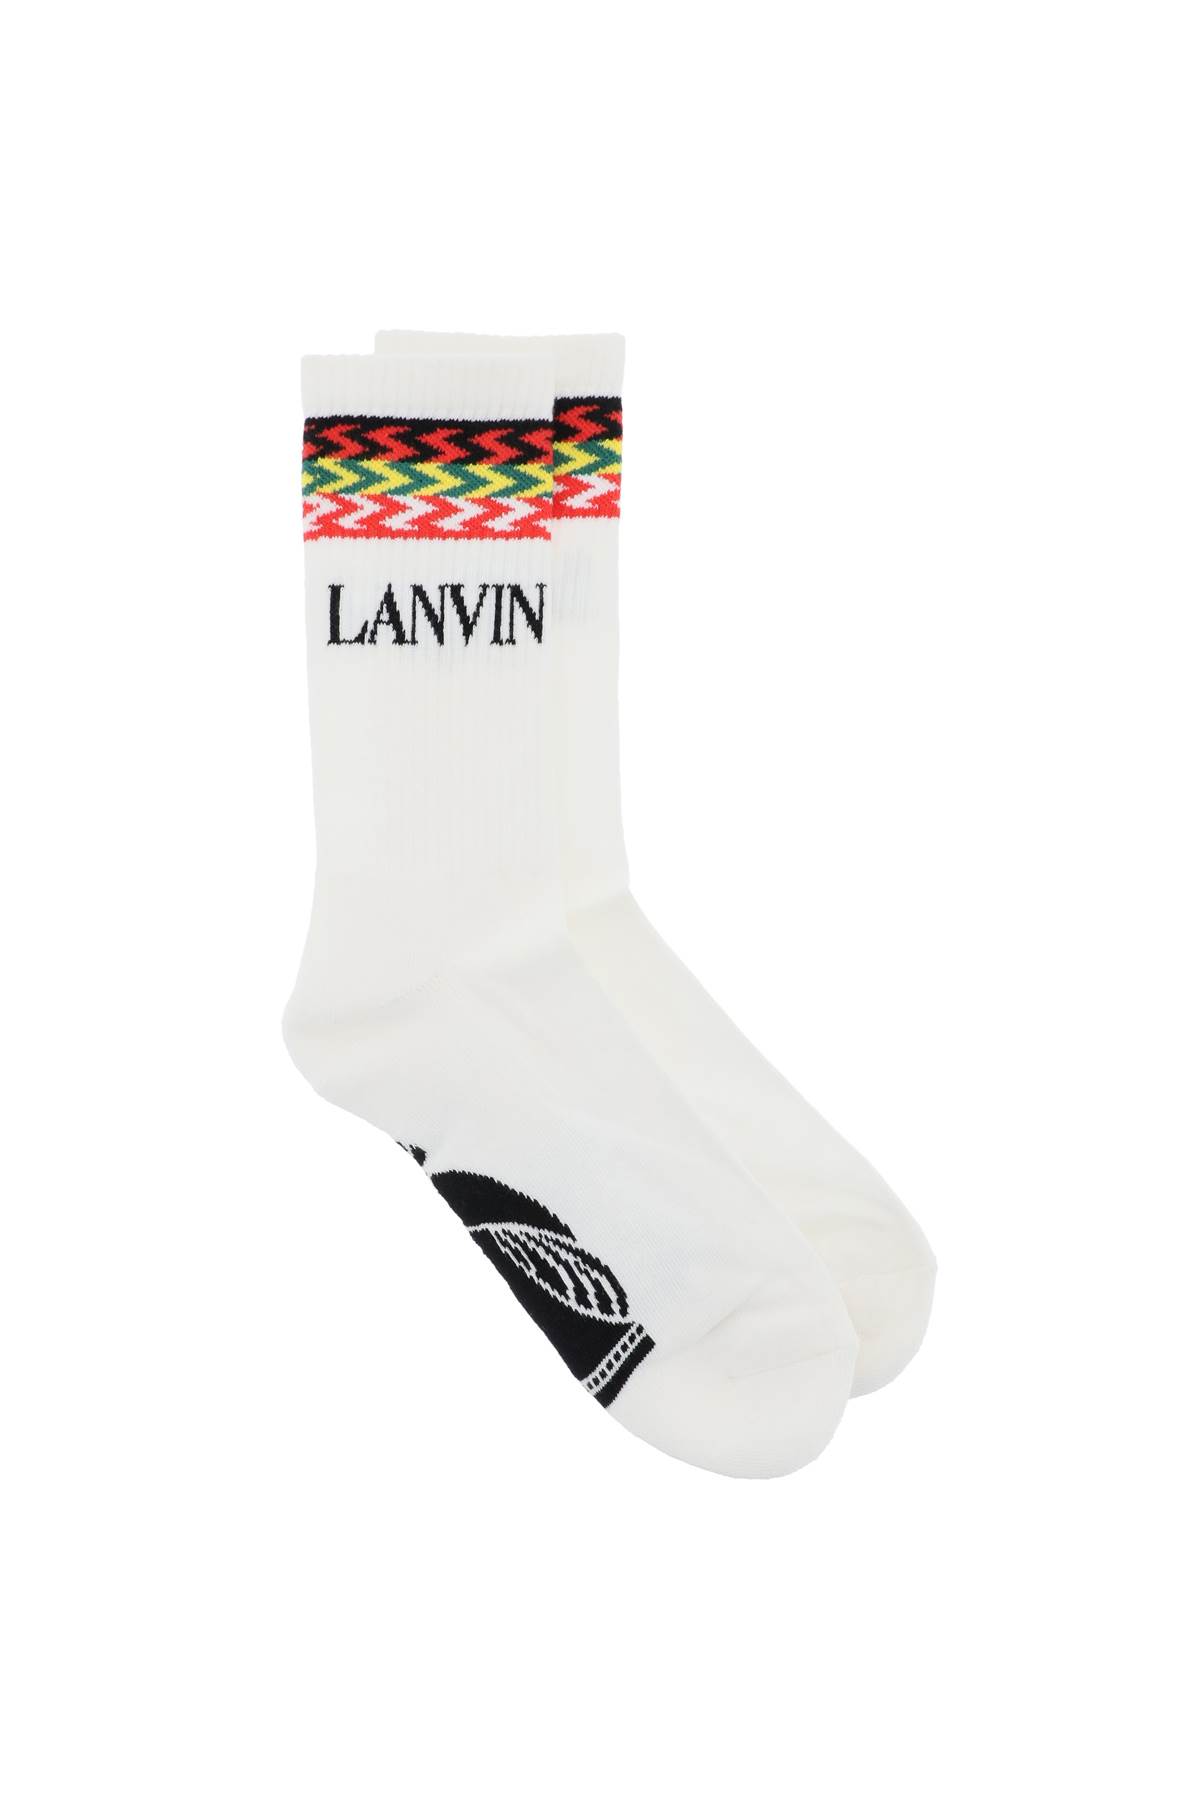 Lanvin Kerb Socks